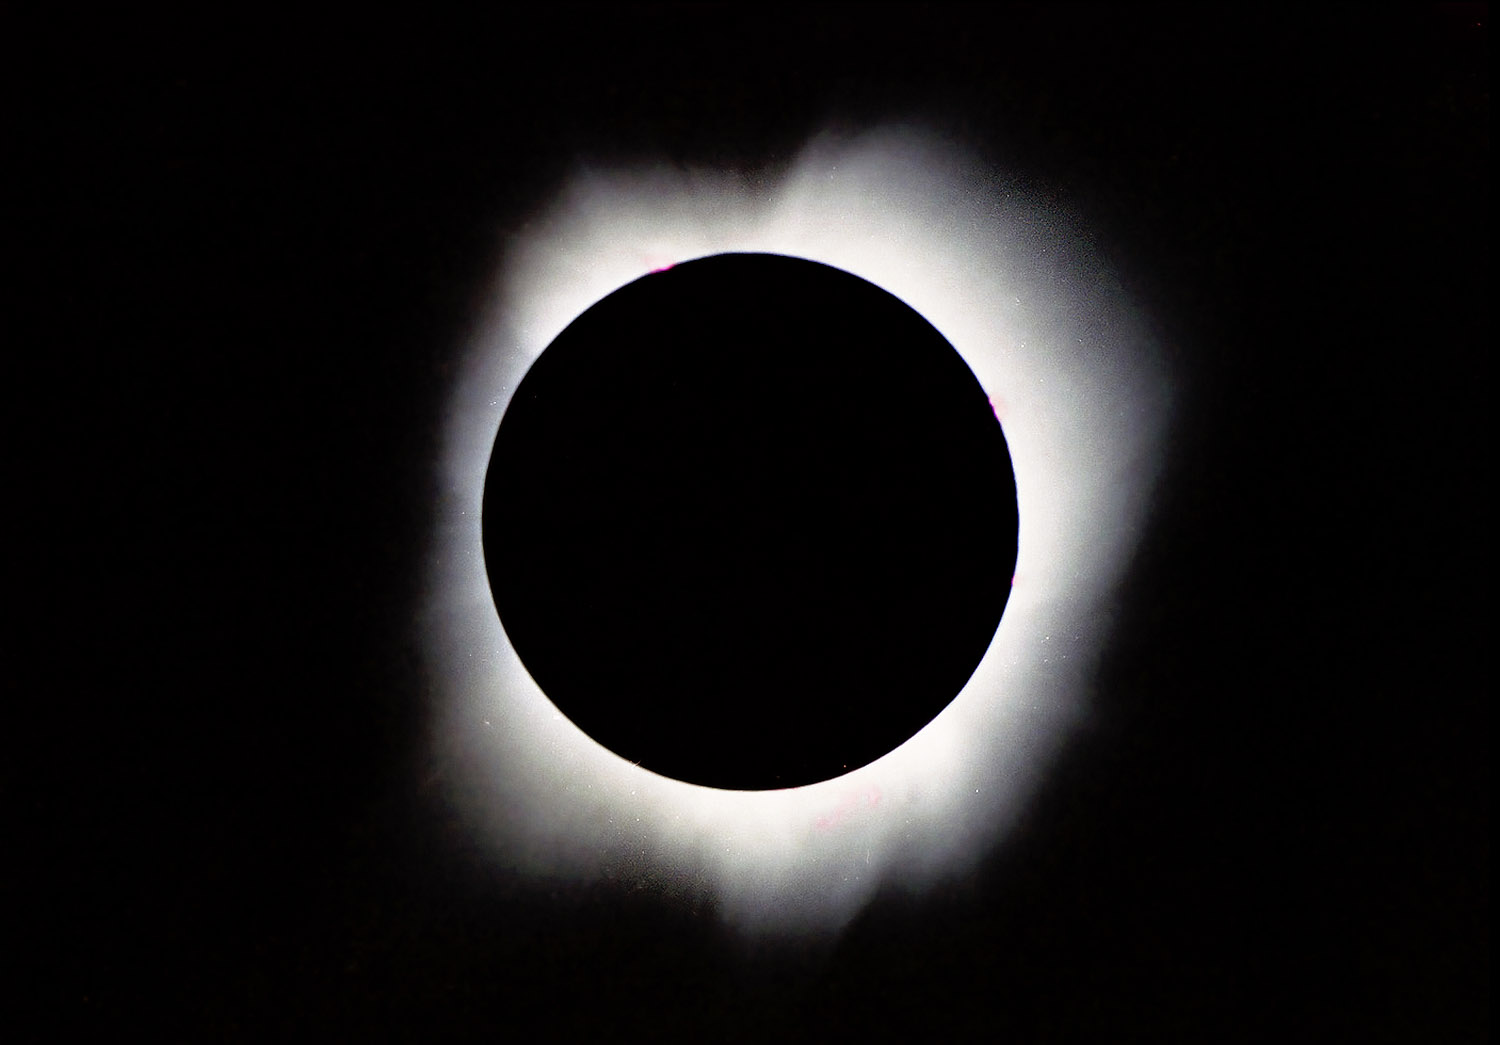 Eclipse 1991 - A62 - Full Corona from Baja